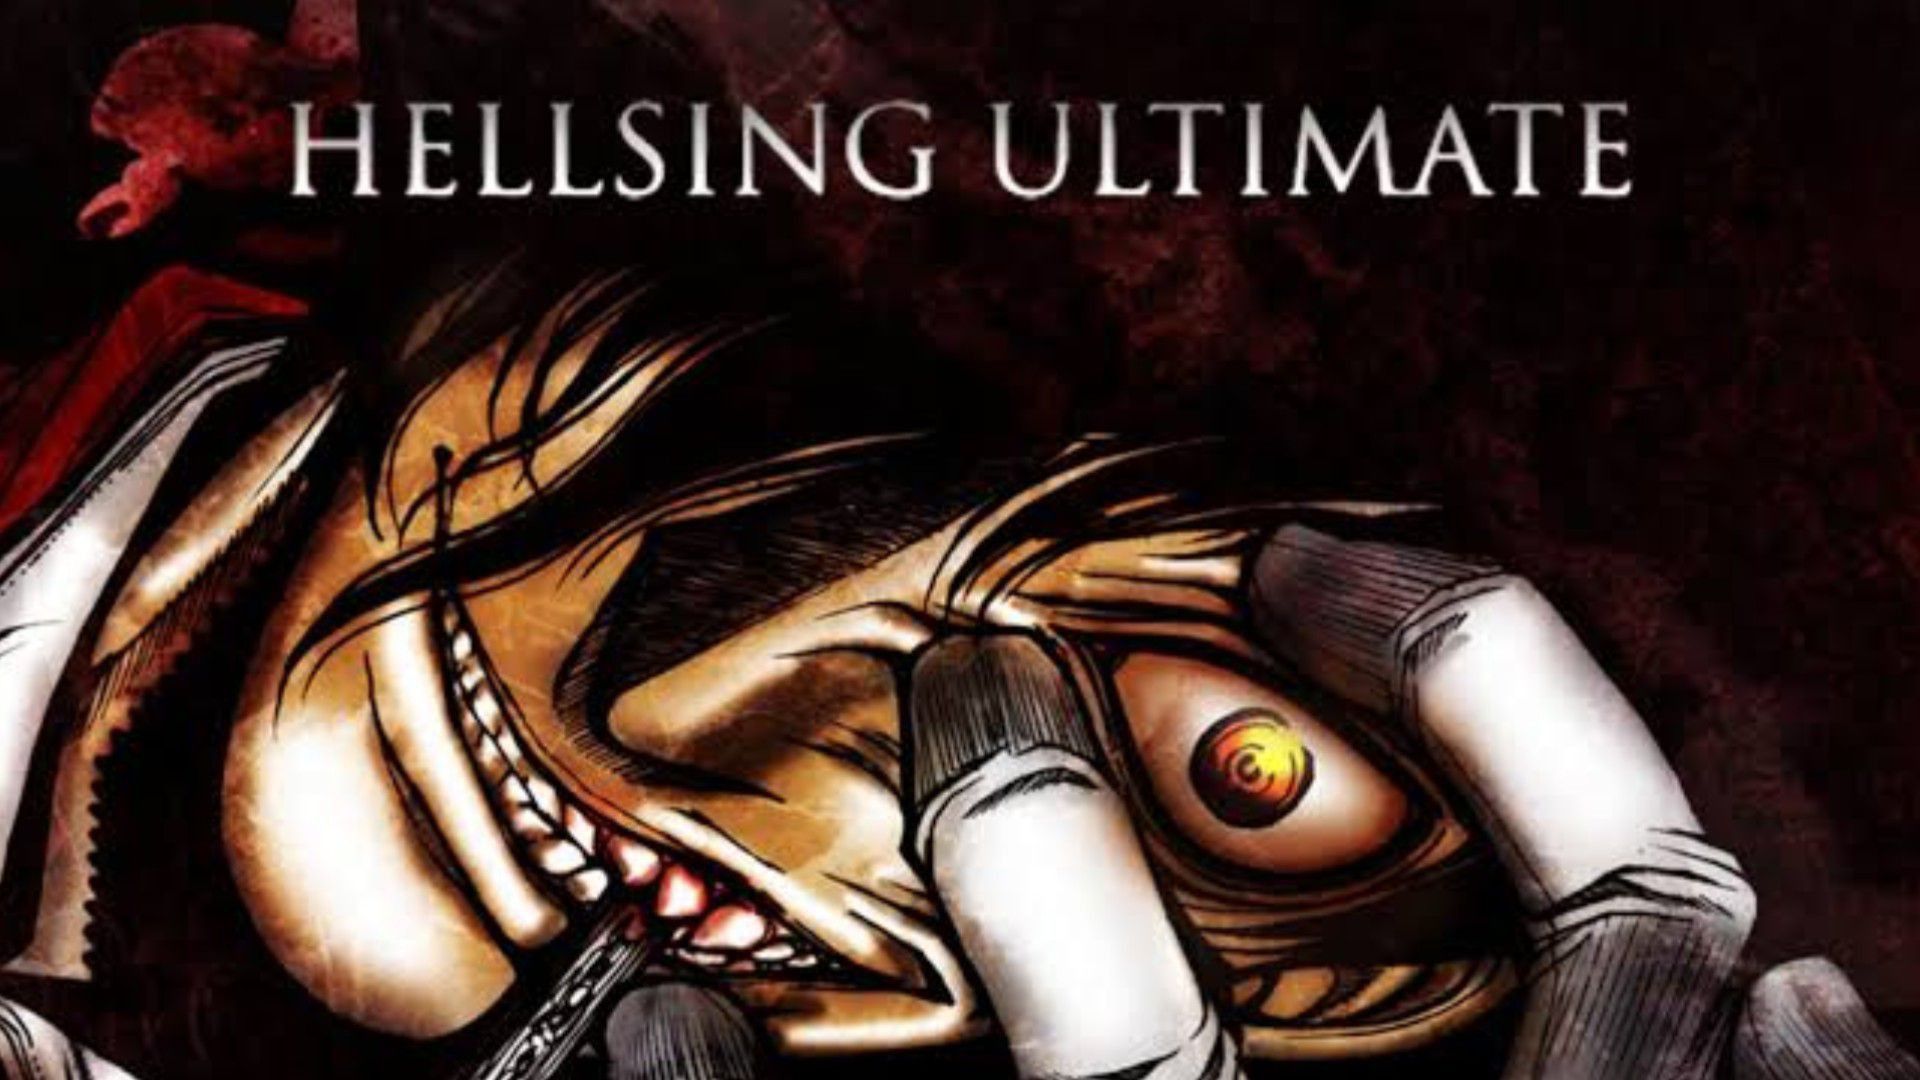 Watch Hellsing Ultimate Season 1 Episode 10 - Hellsing X Online Now